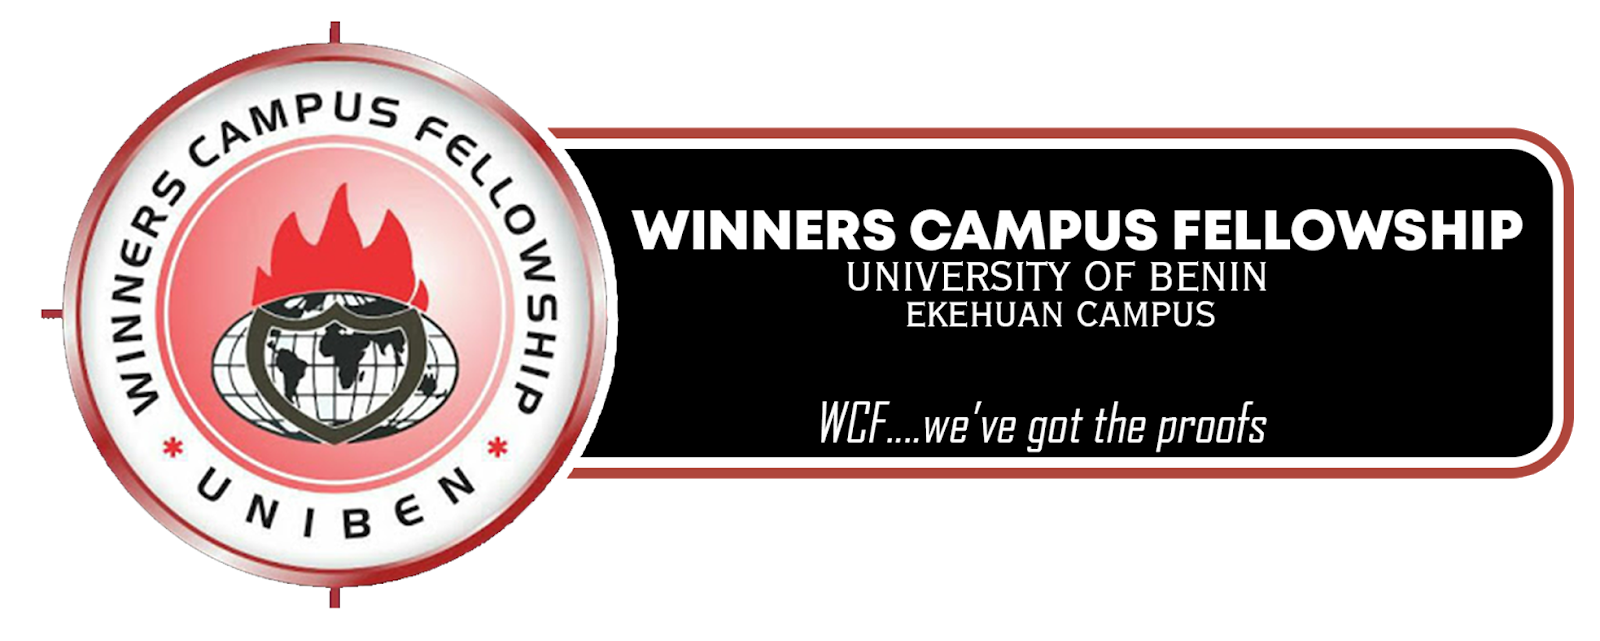 Winners Campus Fellowship, Uniben, Ekehuan Campus. 